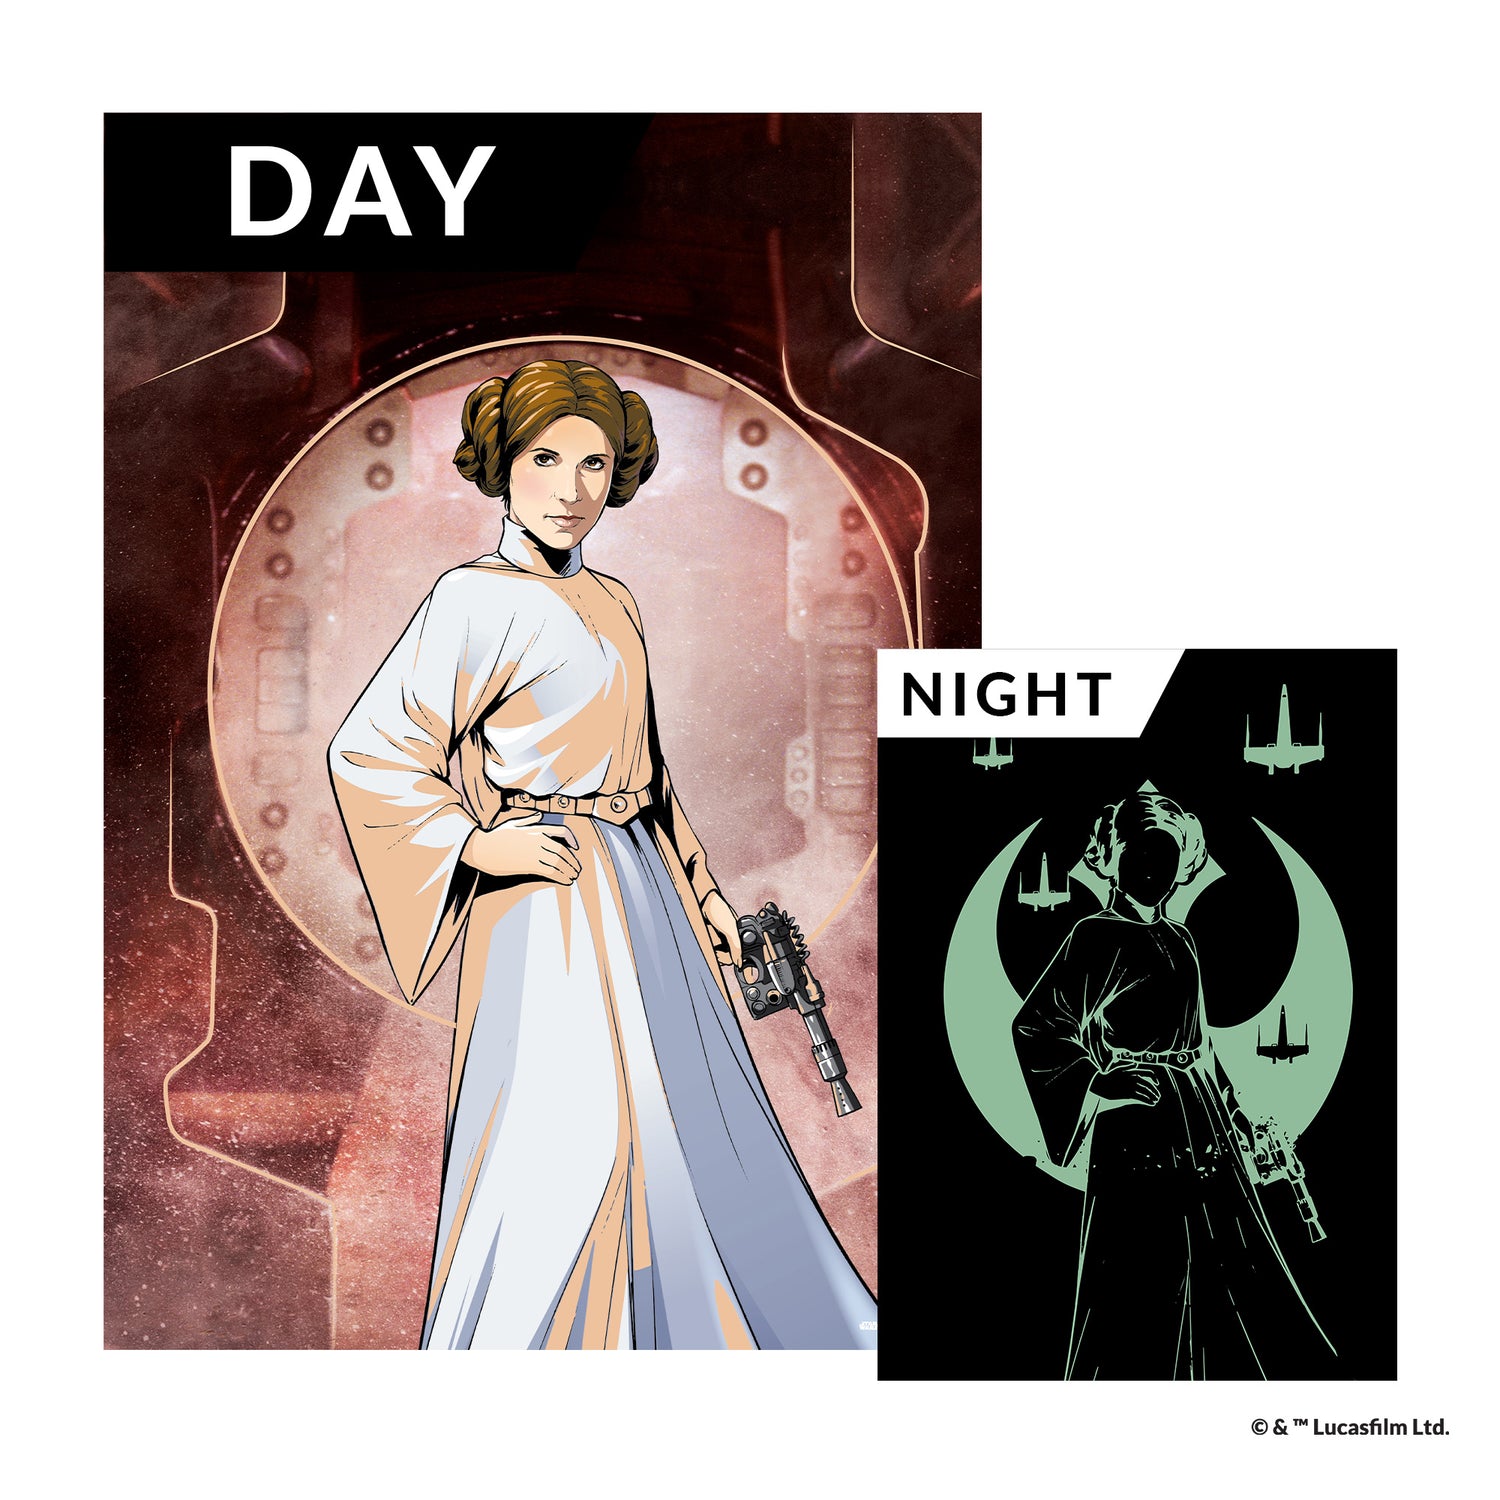 Star Wars™ Poster A1 Princess Leia™*